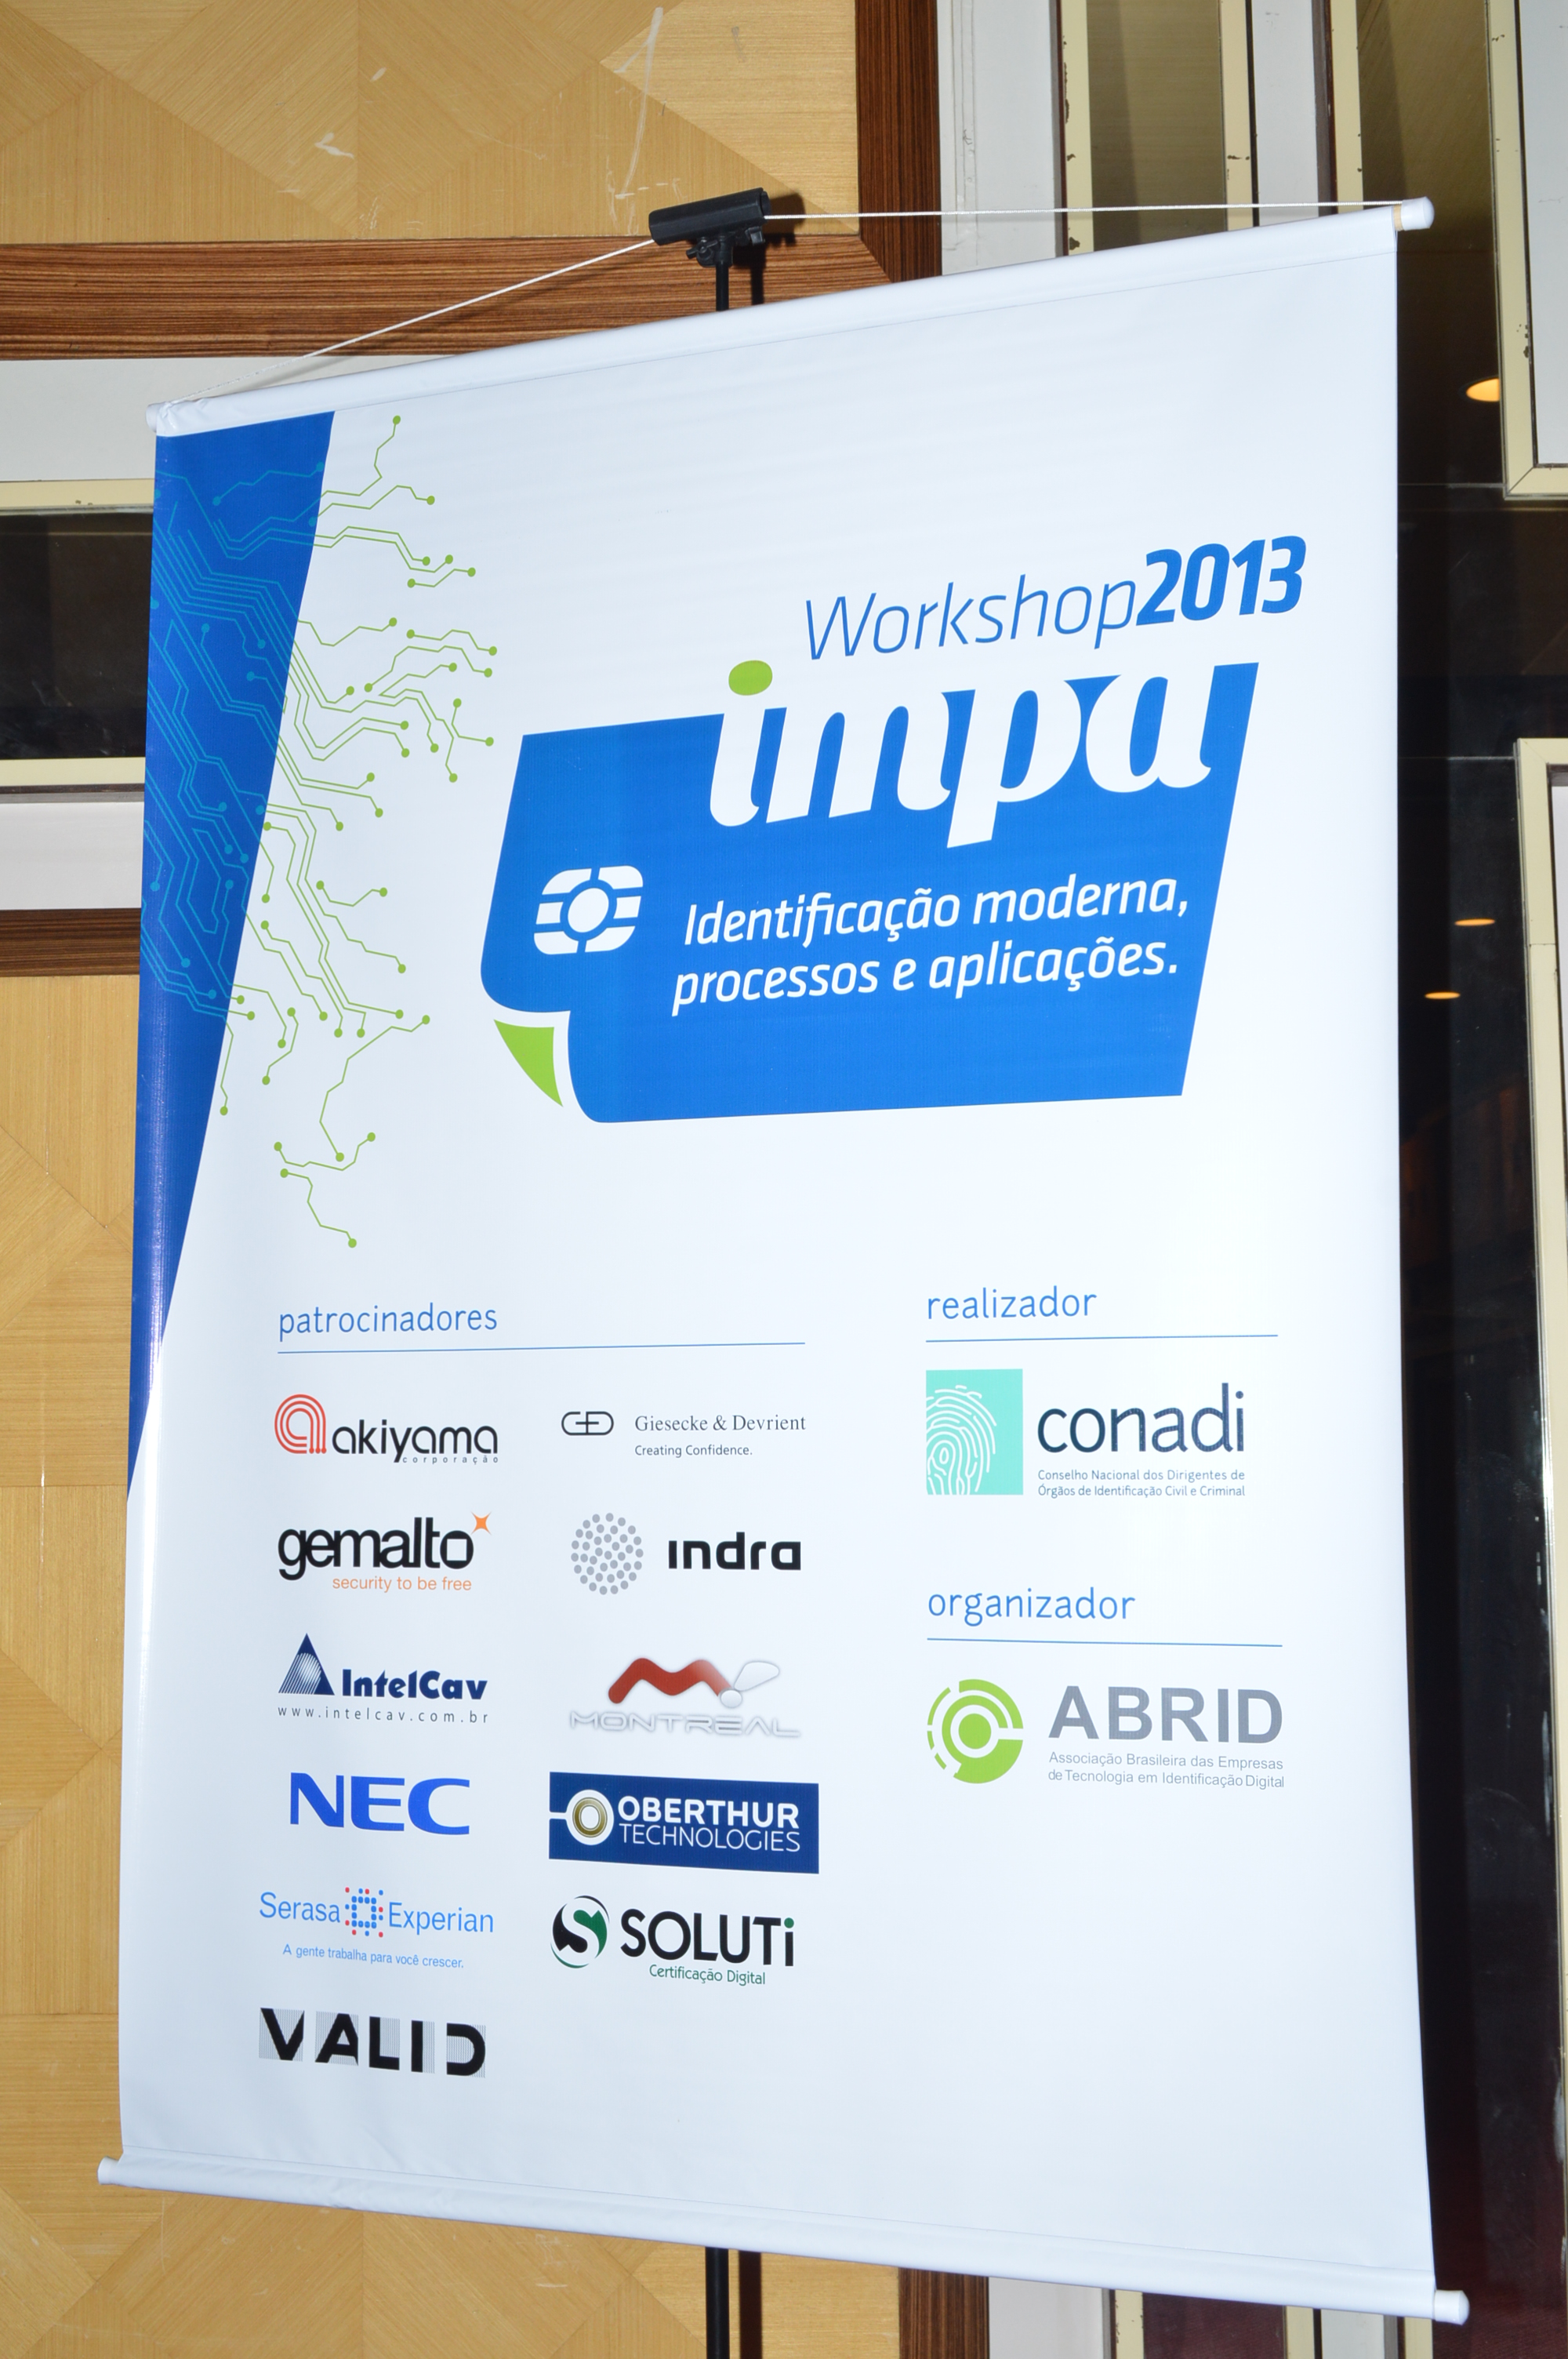 Workshop 2013 - Impa